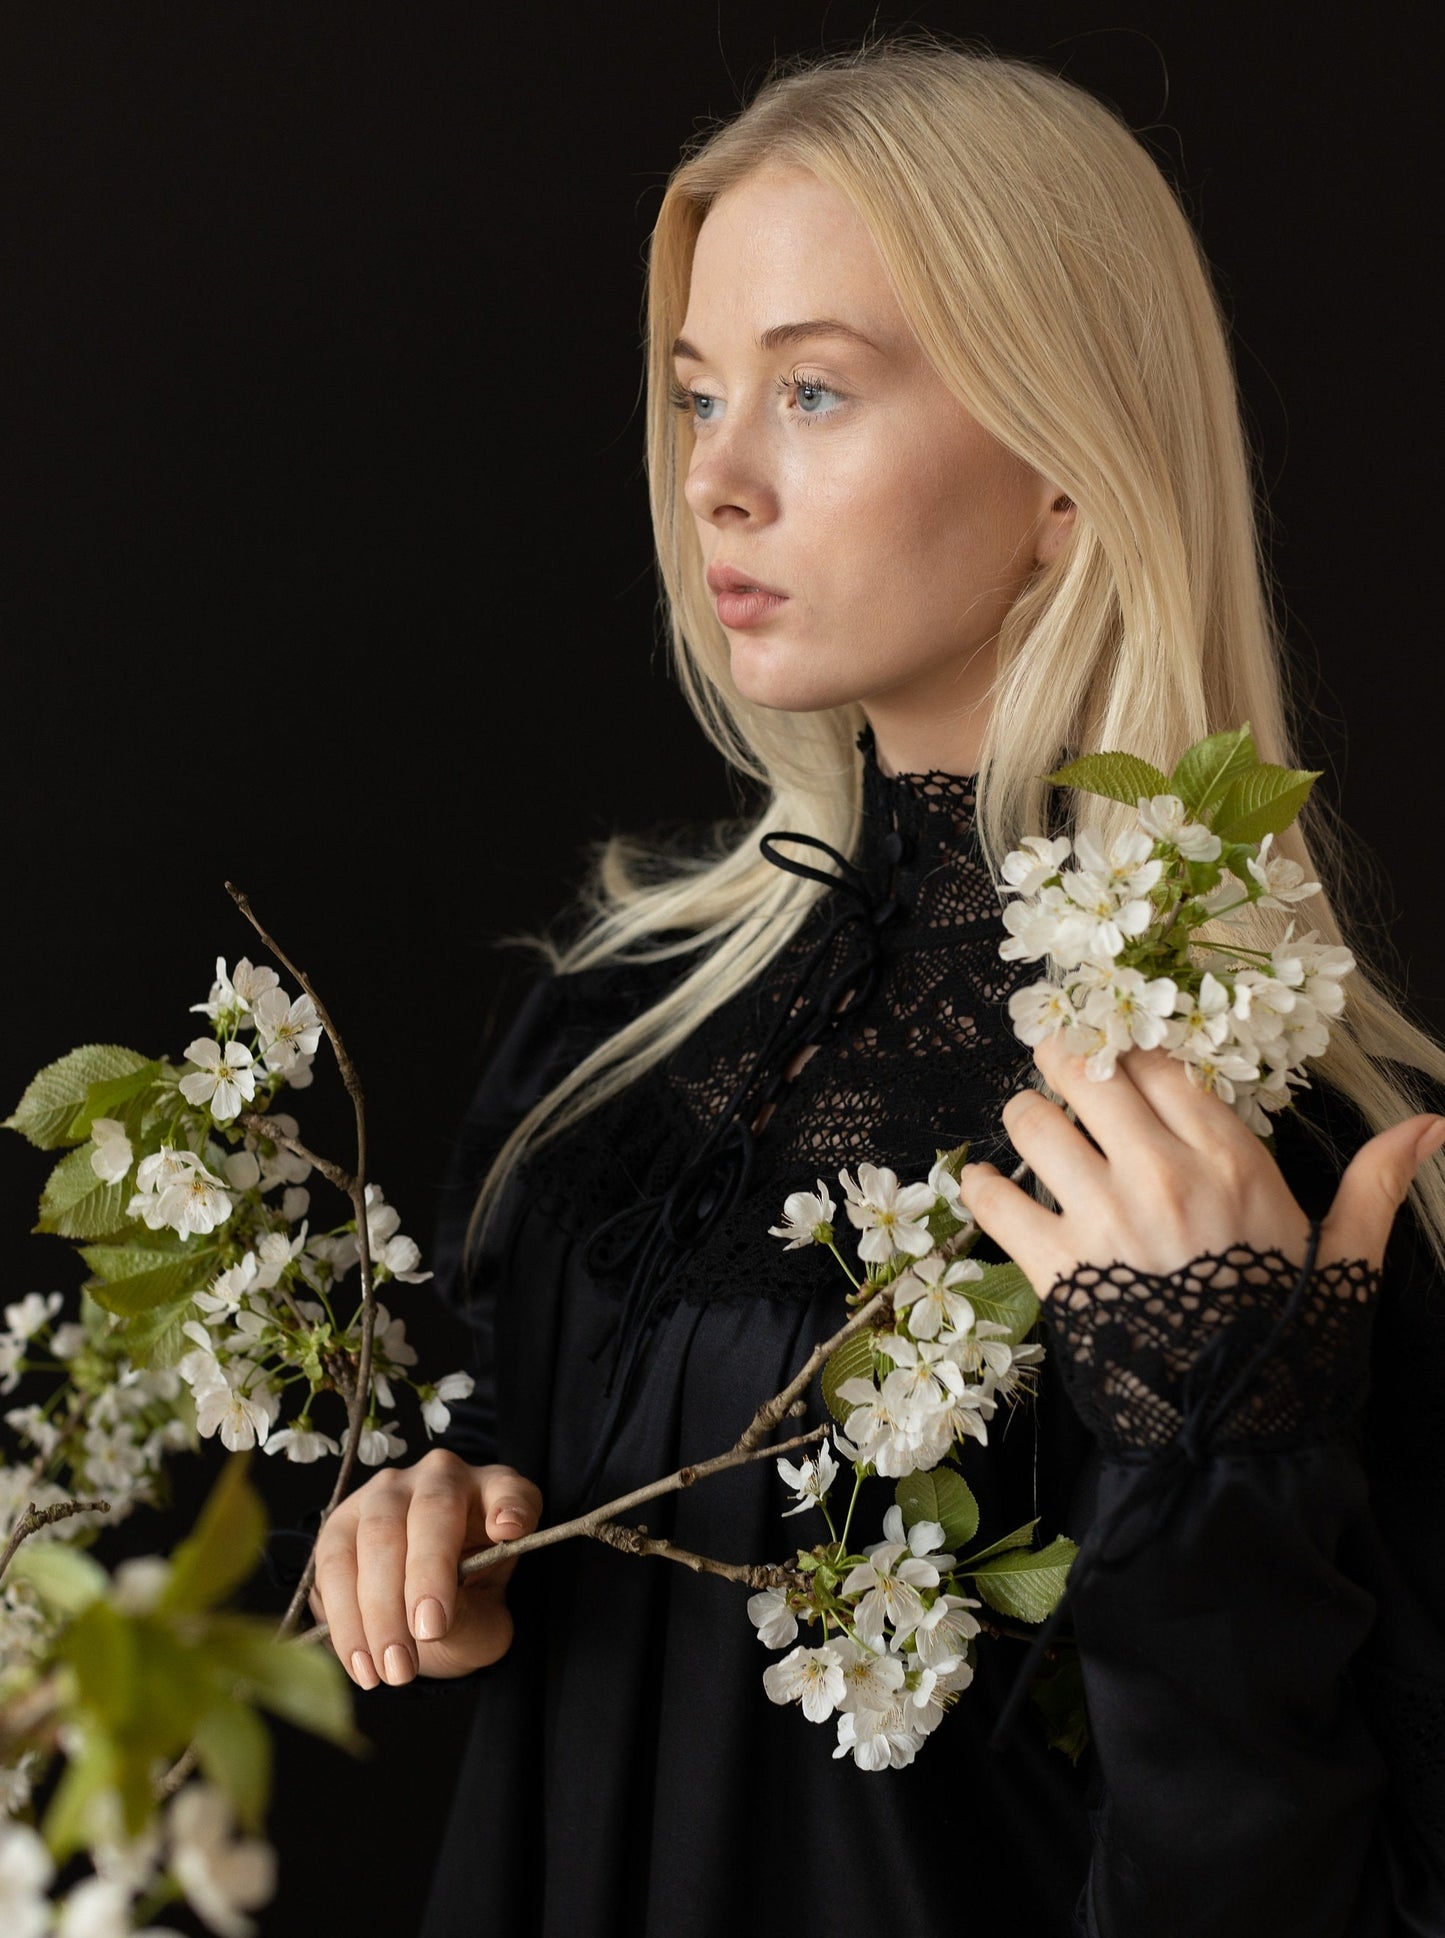 Edwardian Winter - Vintage Inspired Gown in Black Cotton